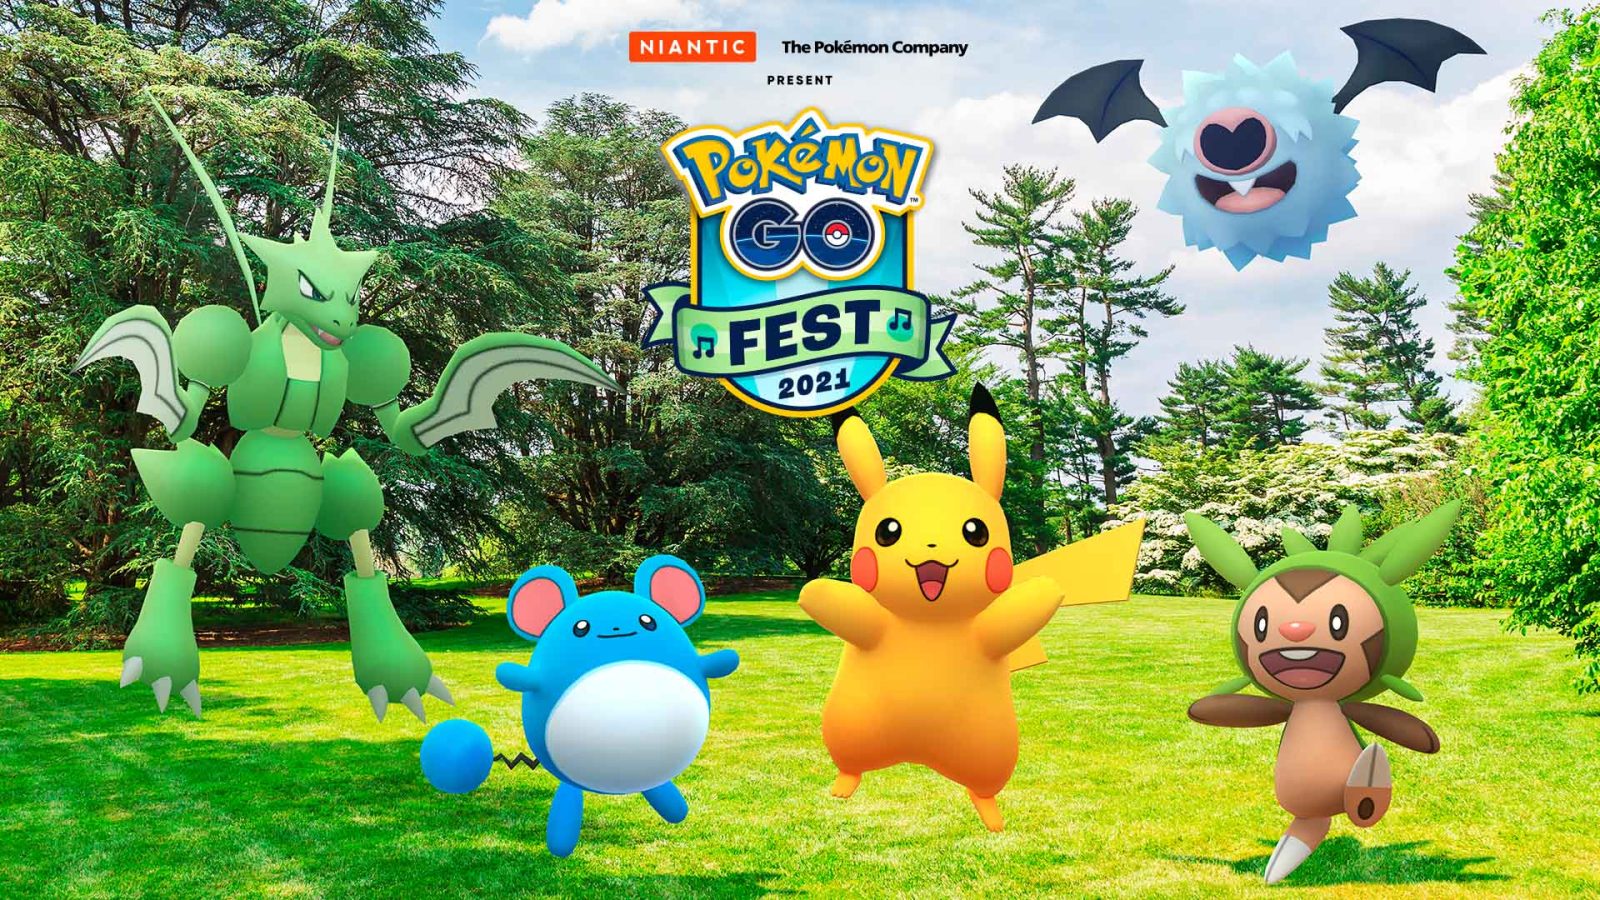 Niantic announces the return of Pokémon GO Fest in 2021 9to5Mac